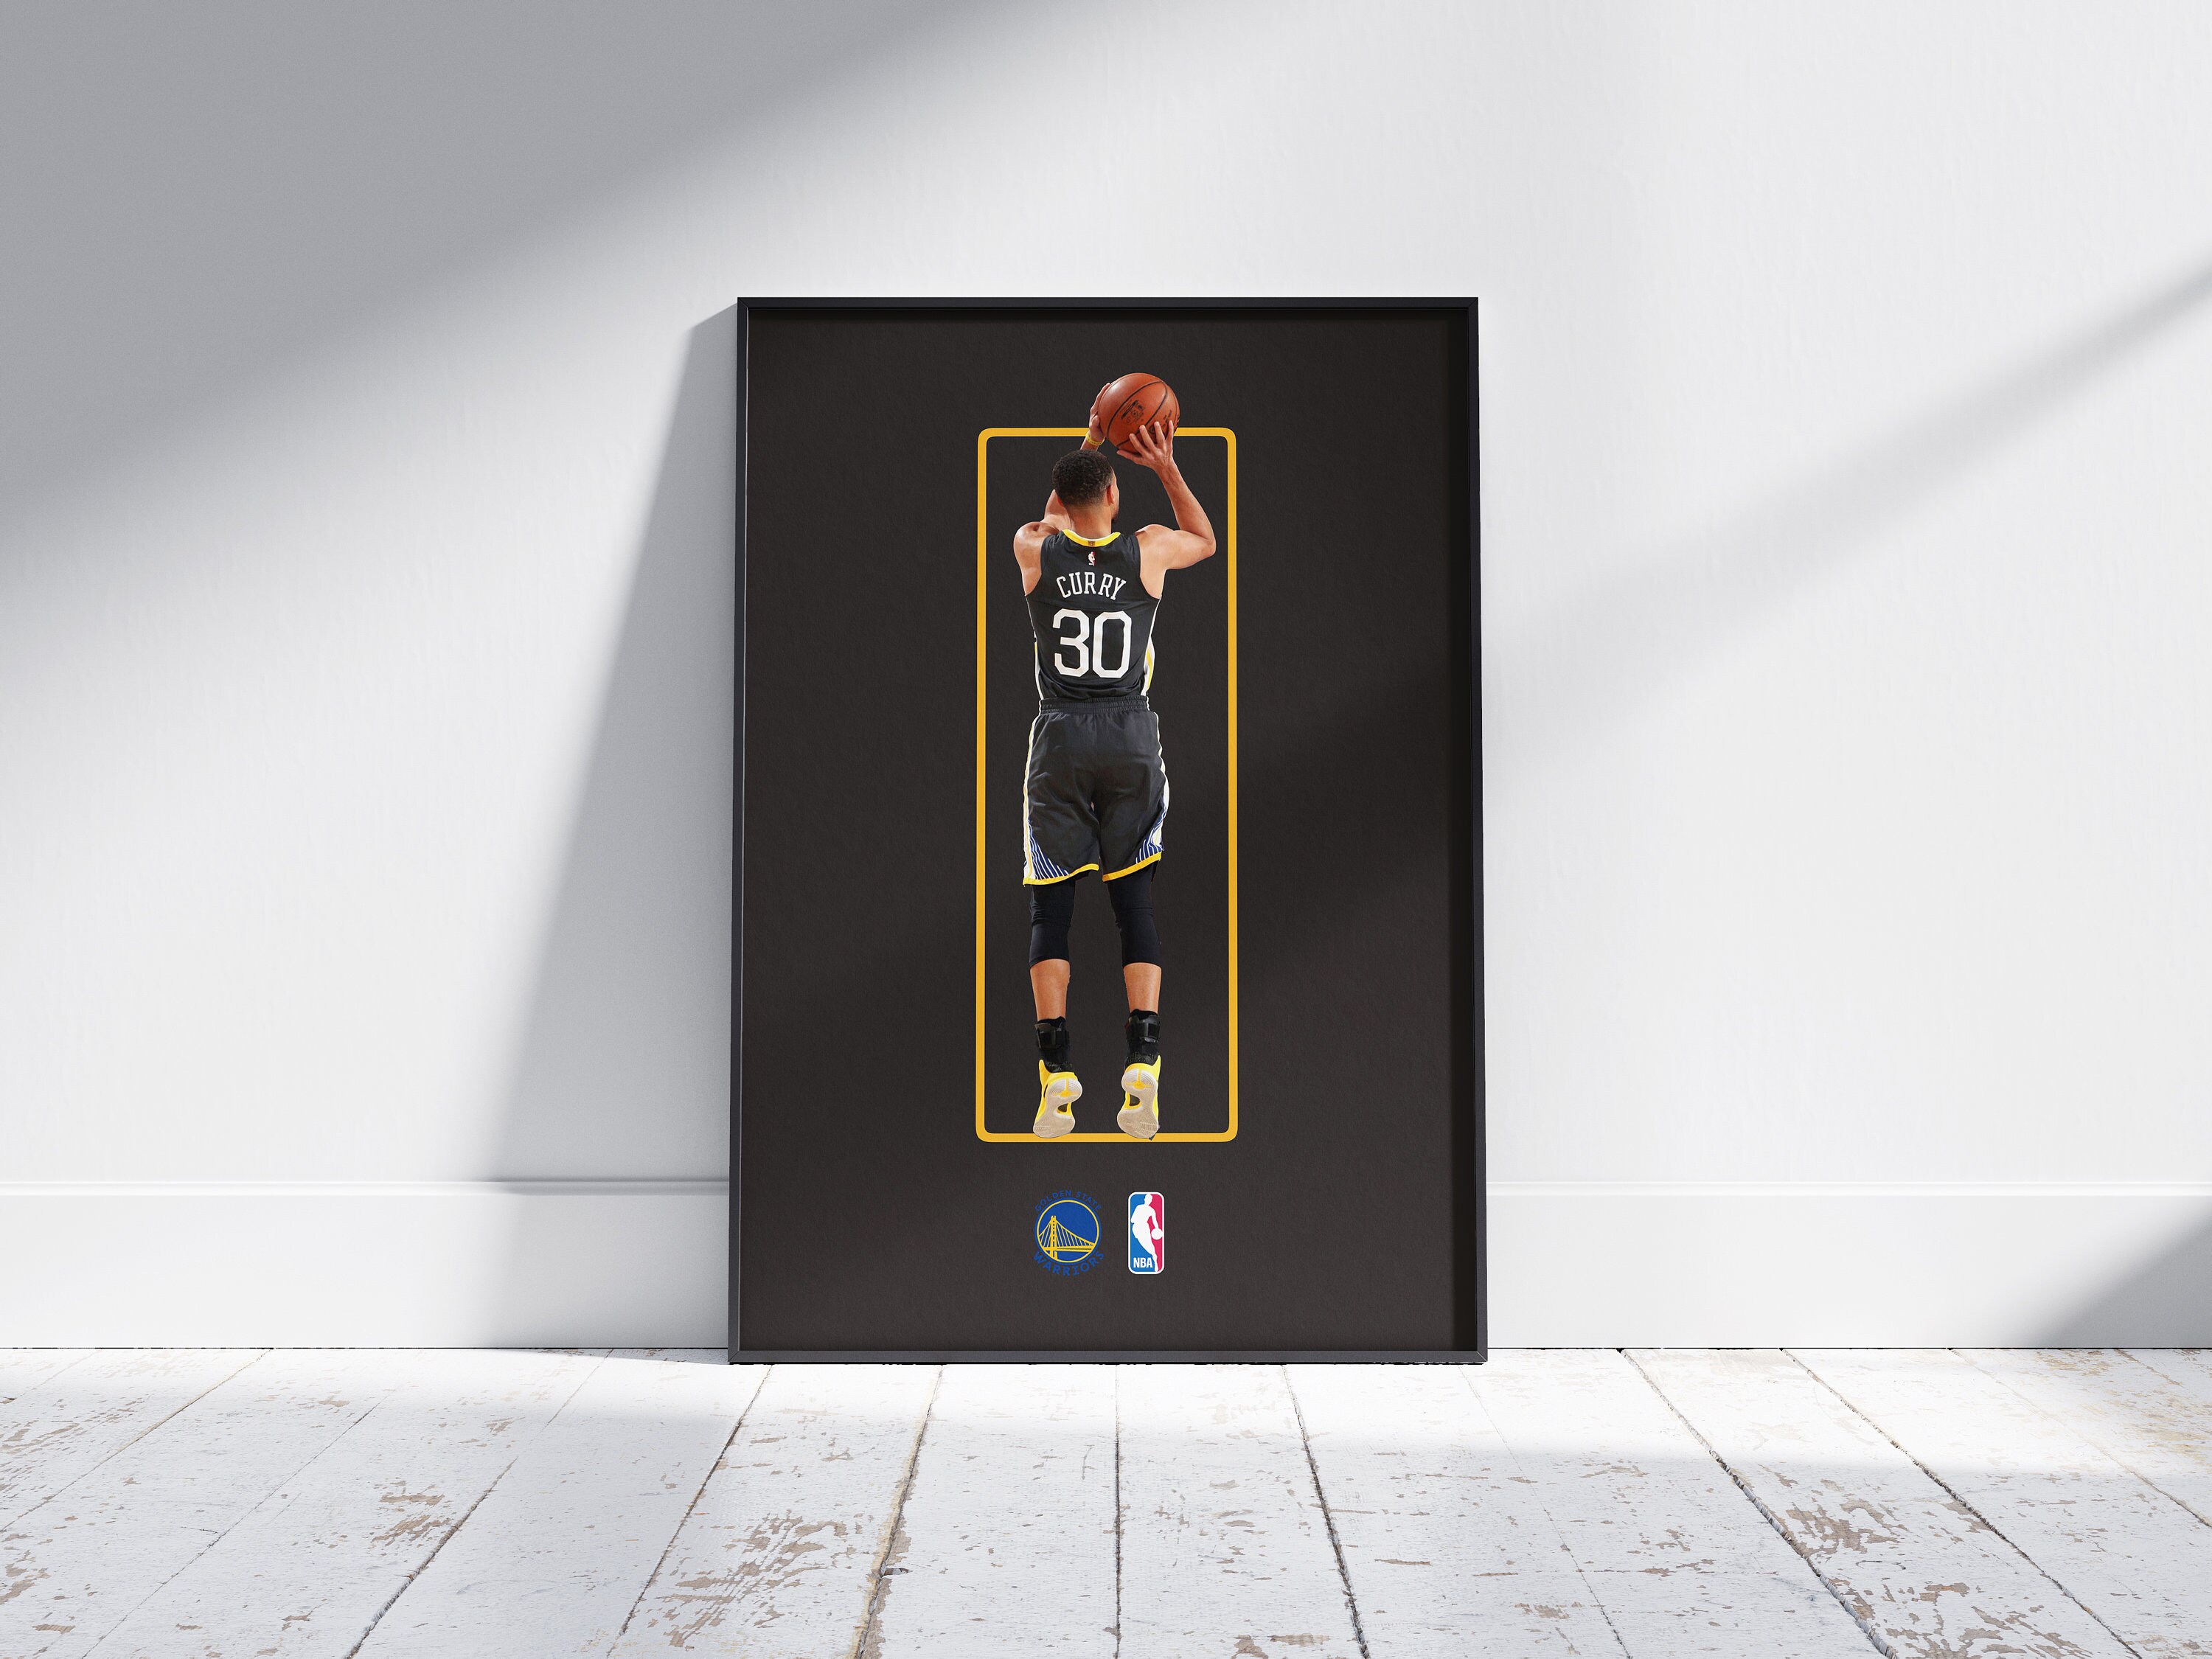 Golden State Warriors 35 x 24 Framed Poster